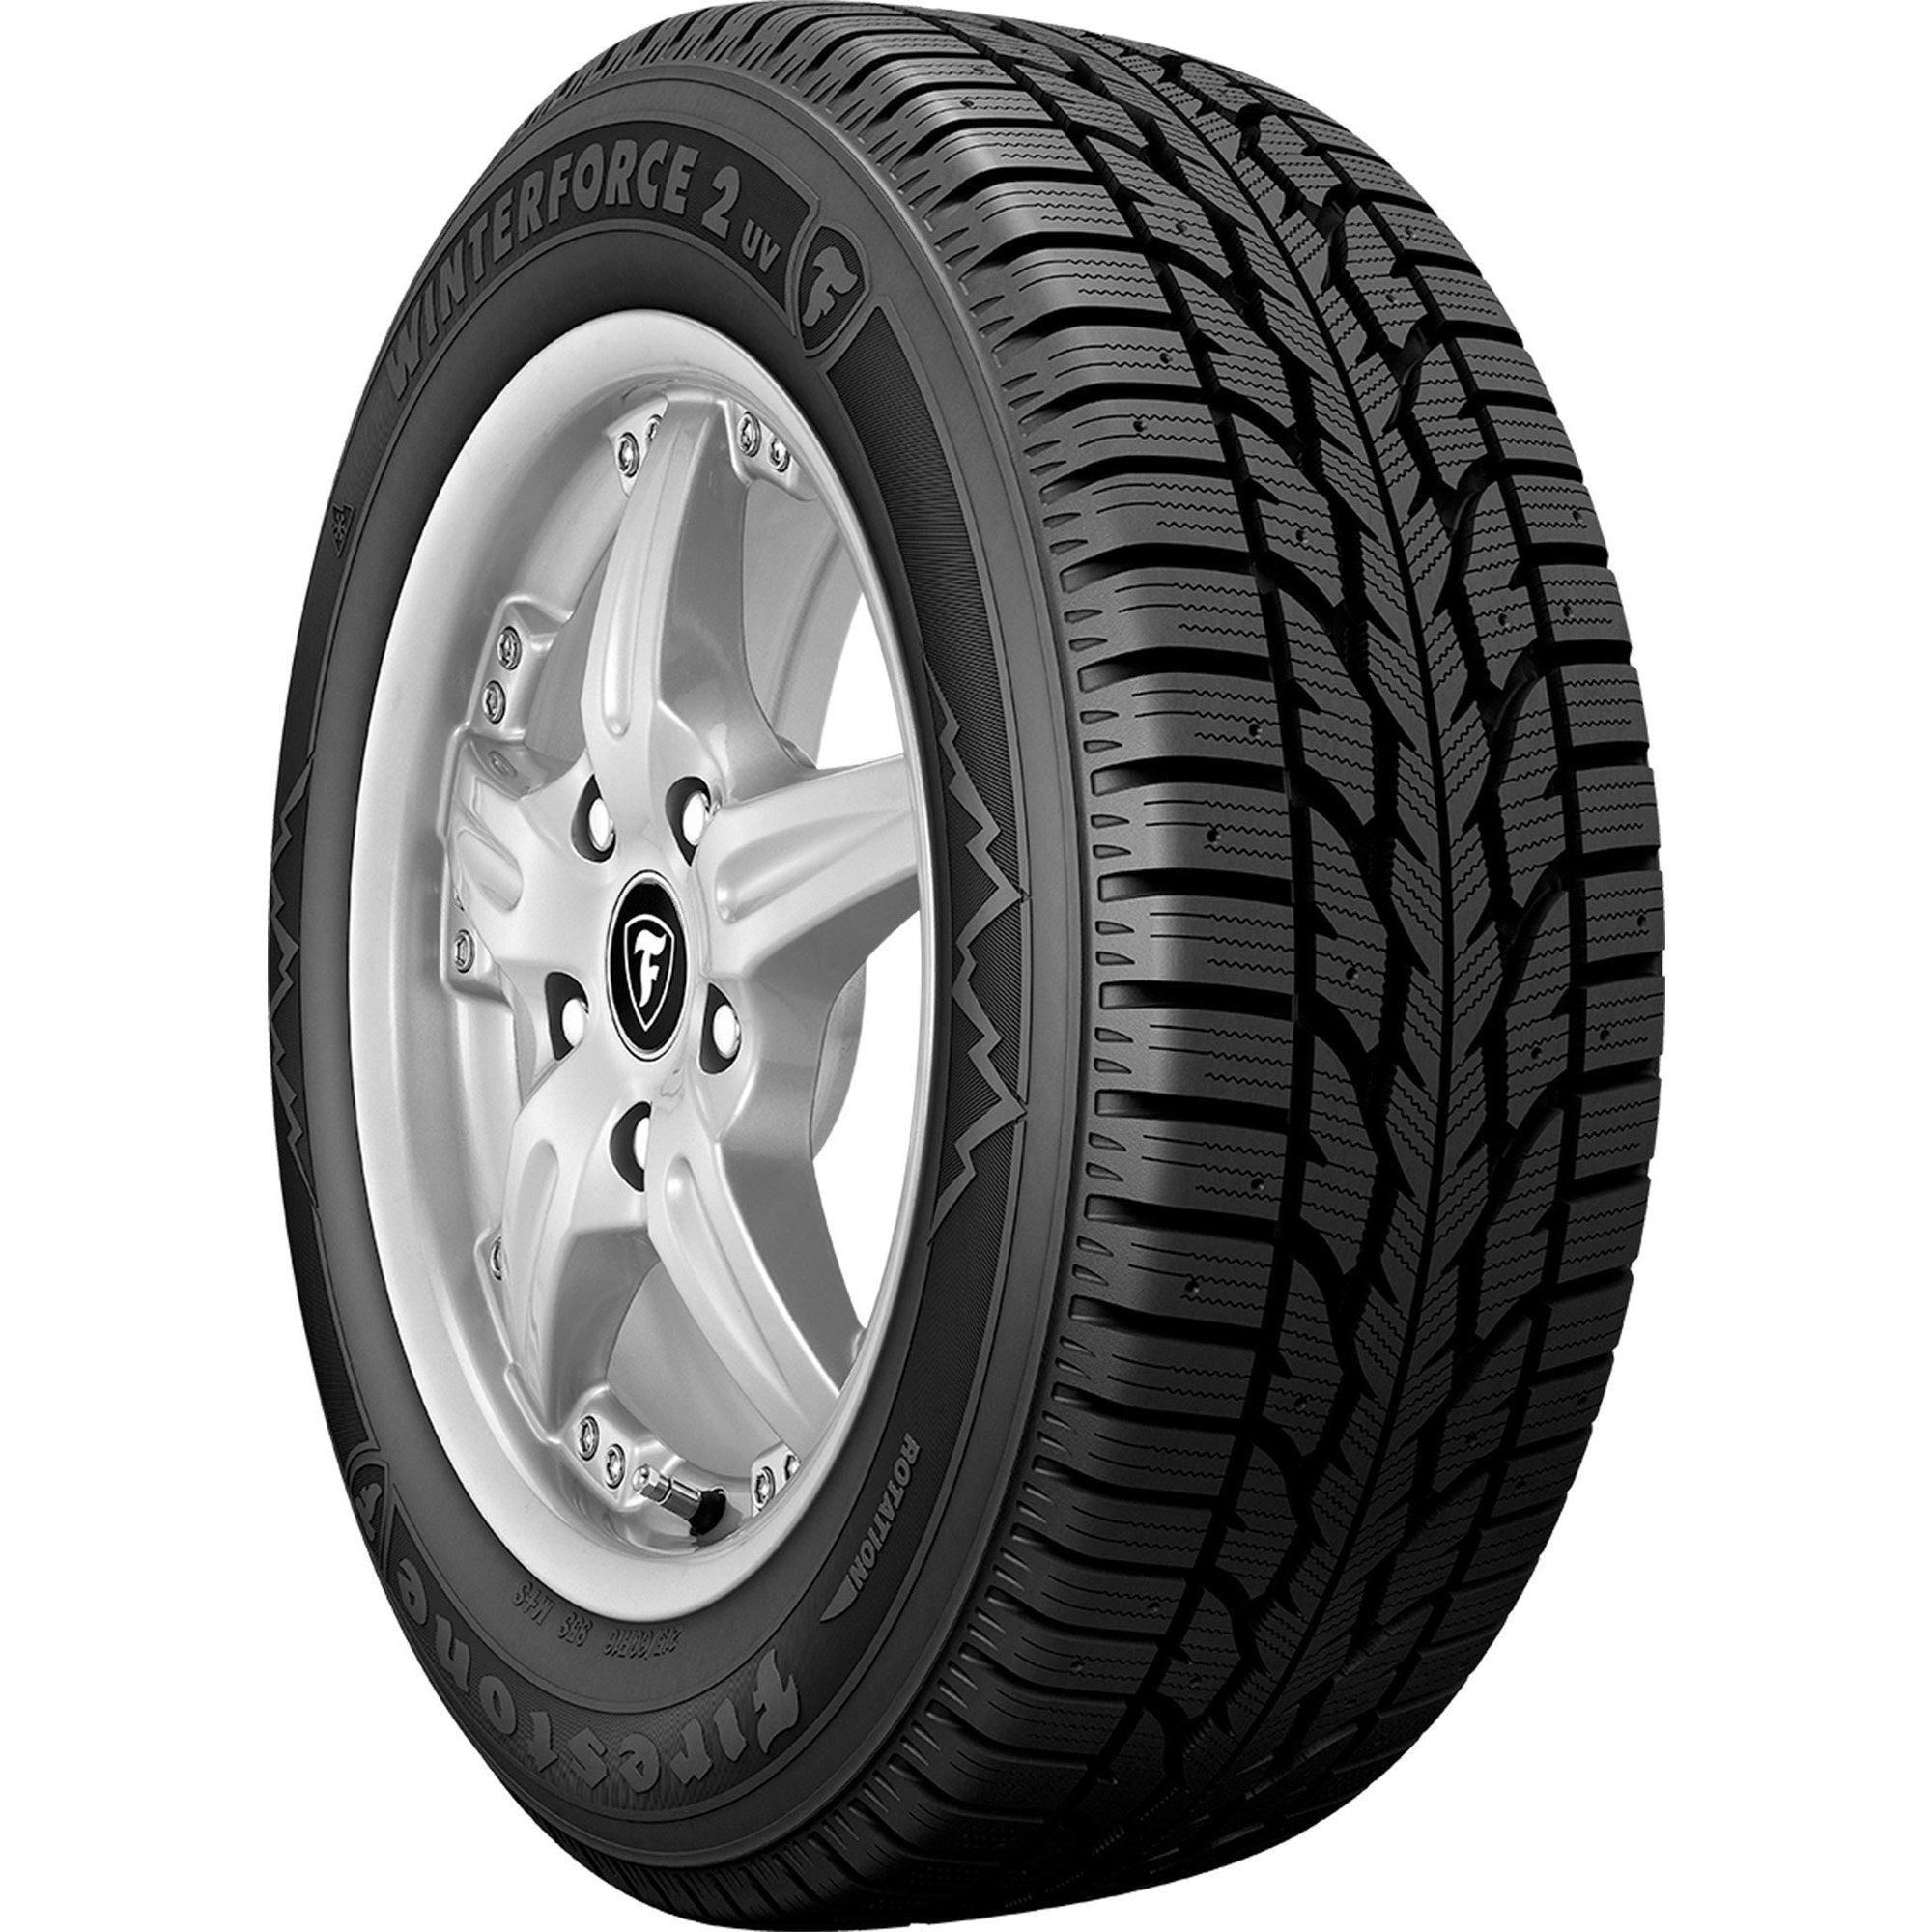 FIRESTONE WINTERFORCE2 UV 235/60R17 (28.1X9.3R 17) Tires